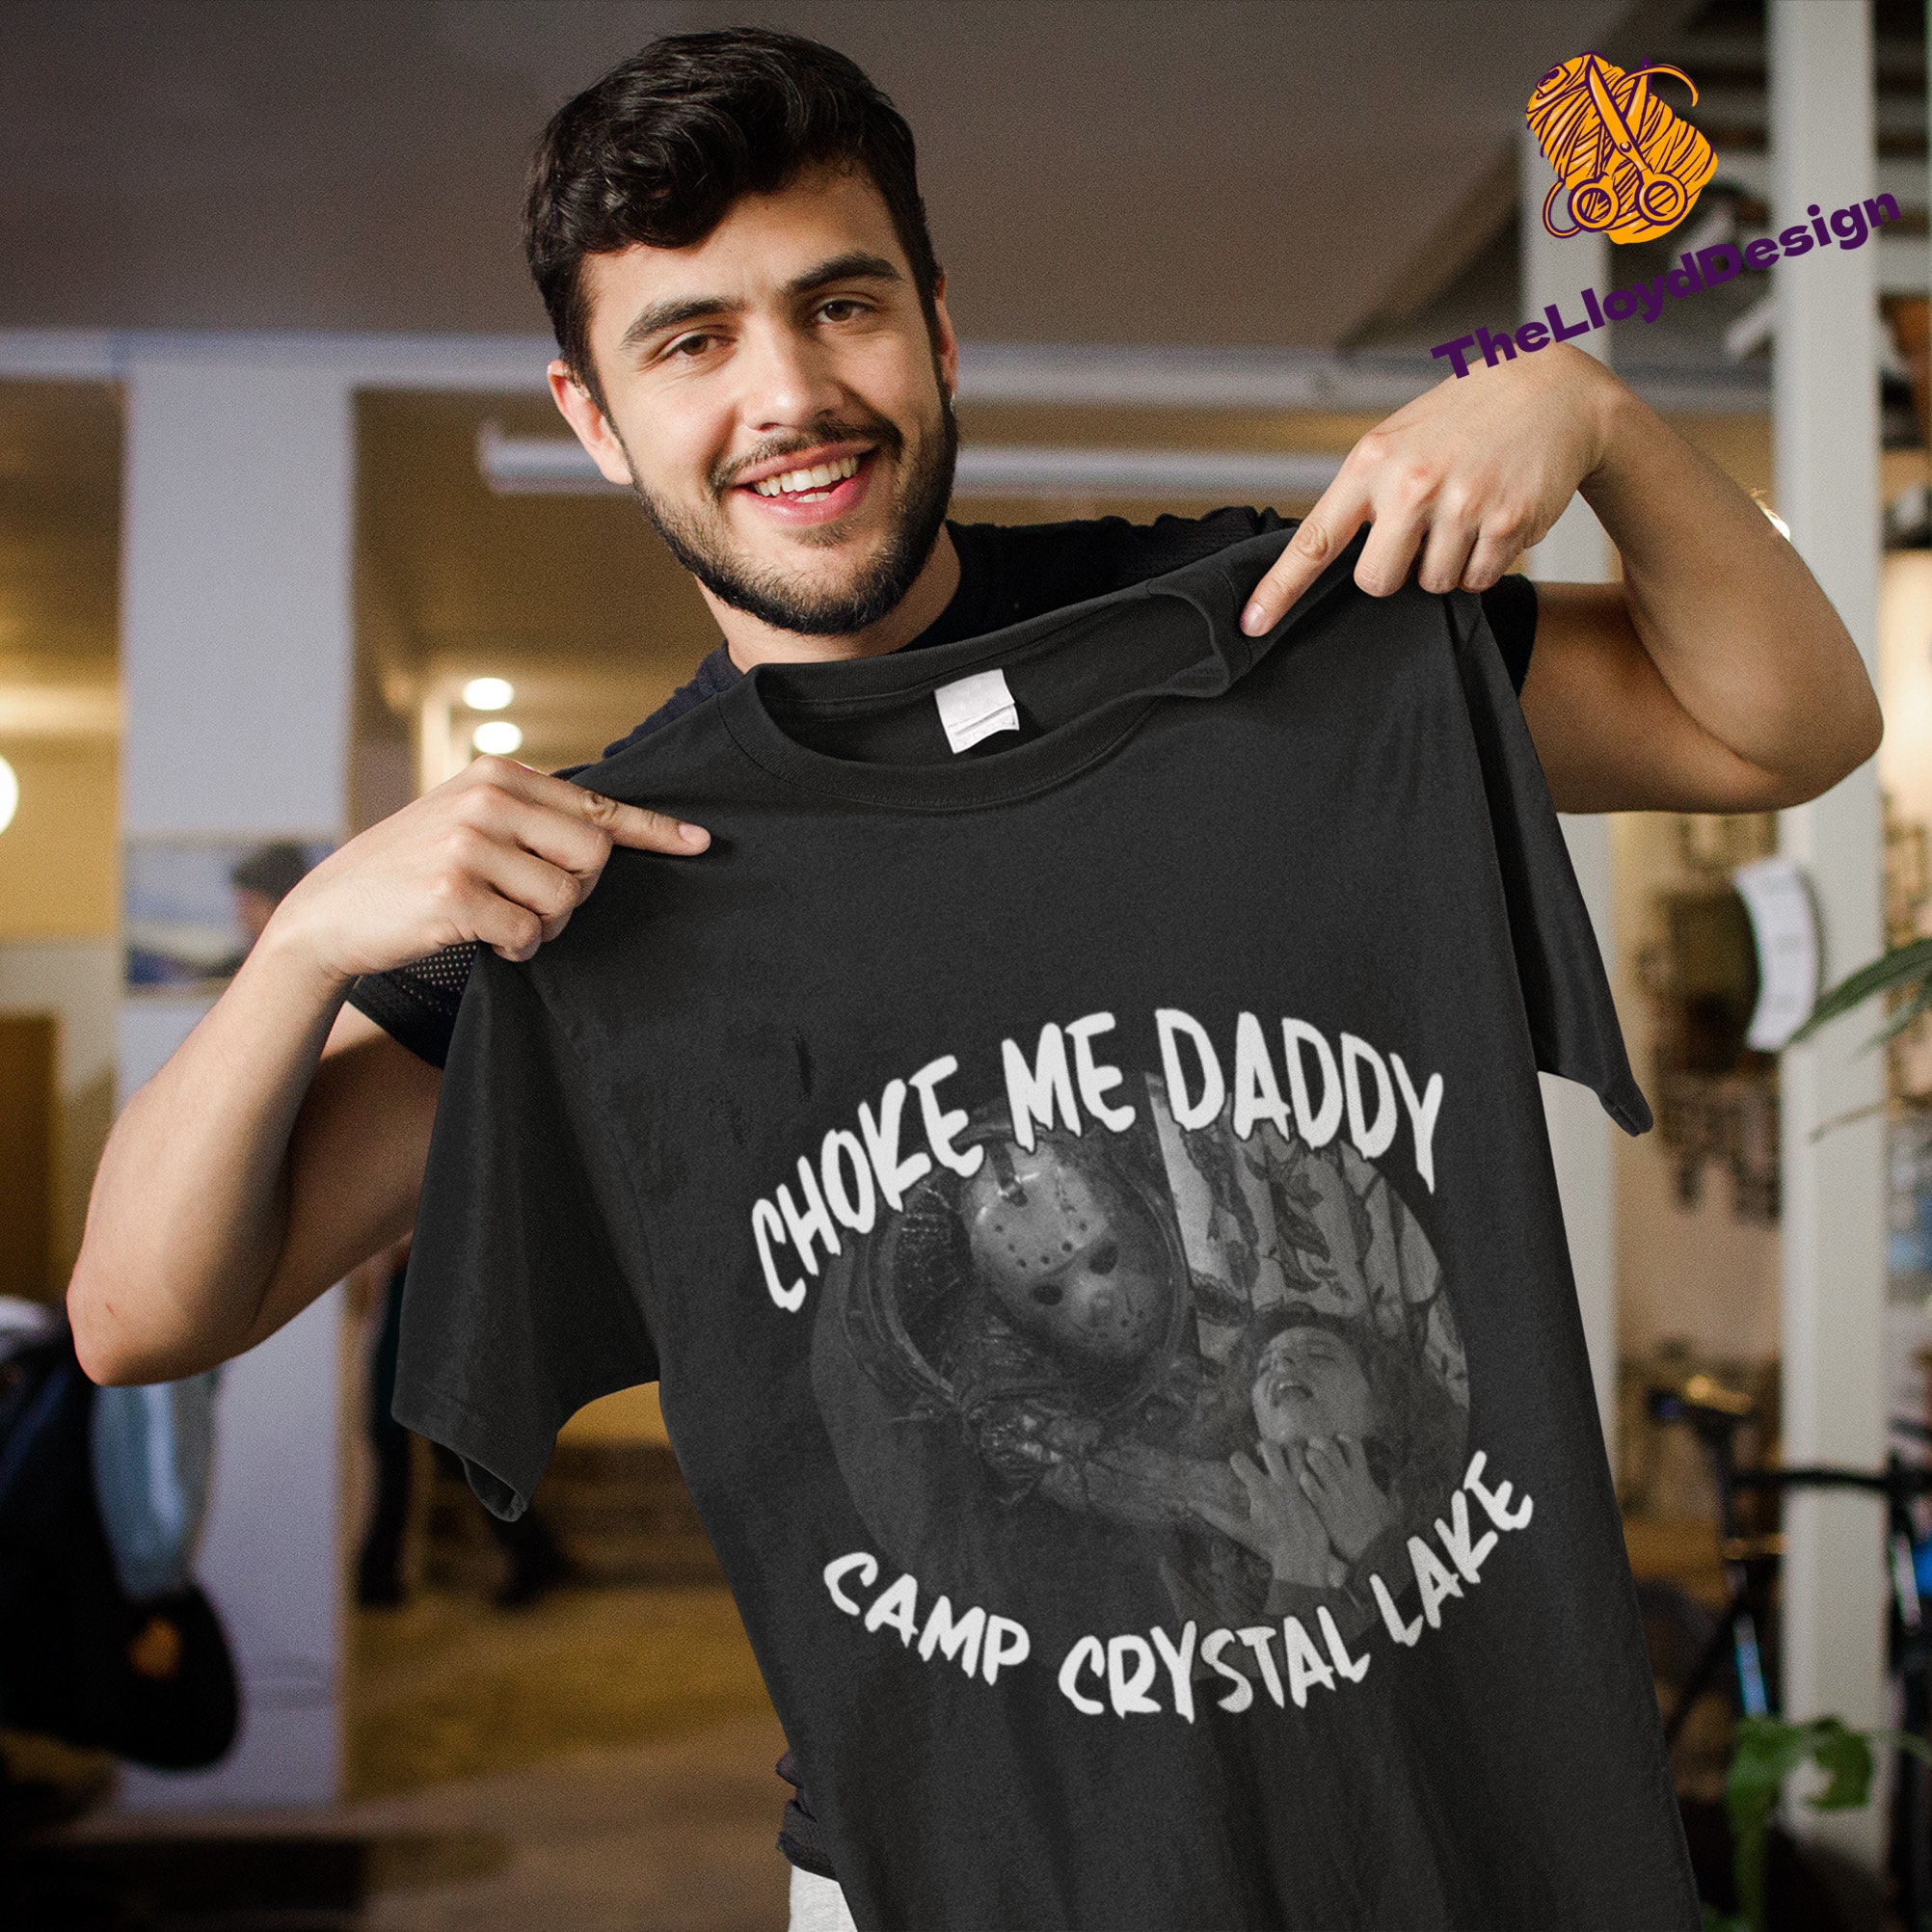 Jason Voorhees T-shirt Choke Me Daddy Camp Crystal Lake - Etsy